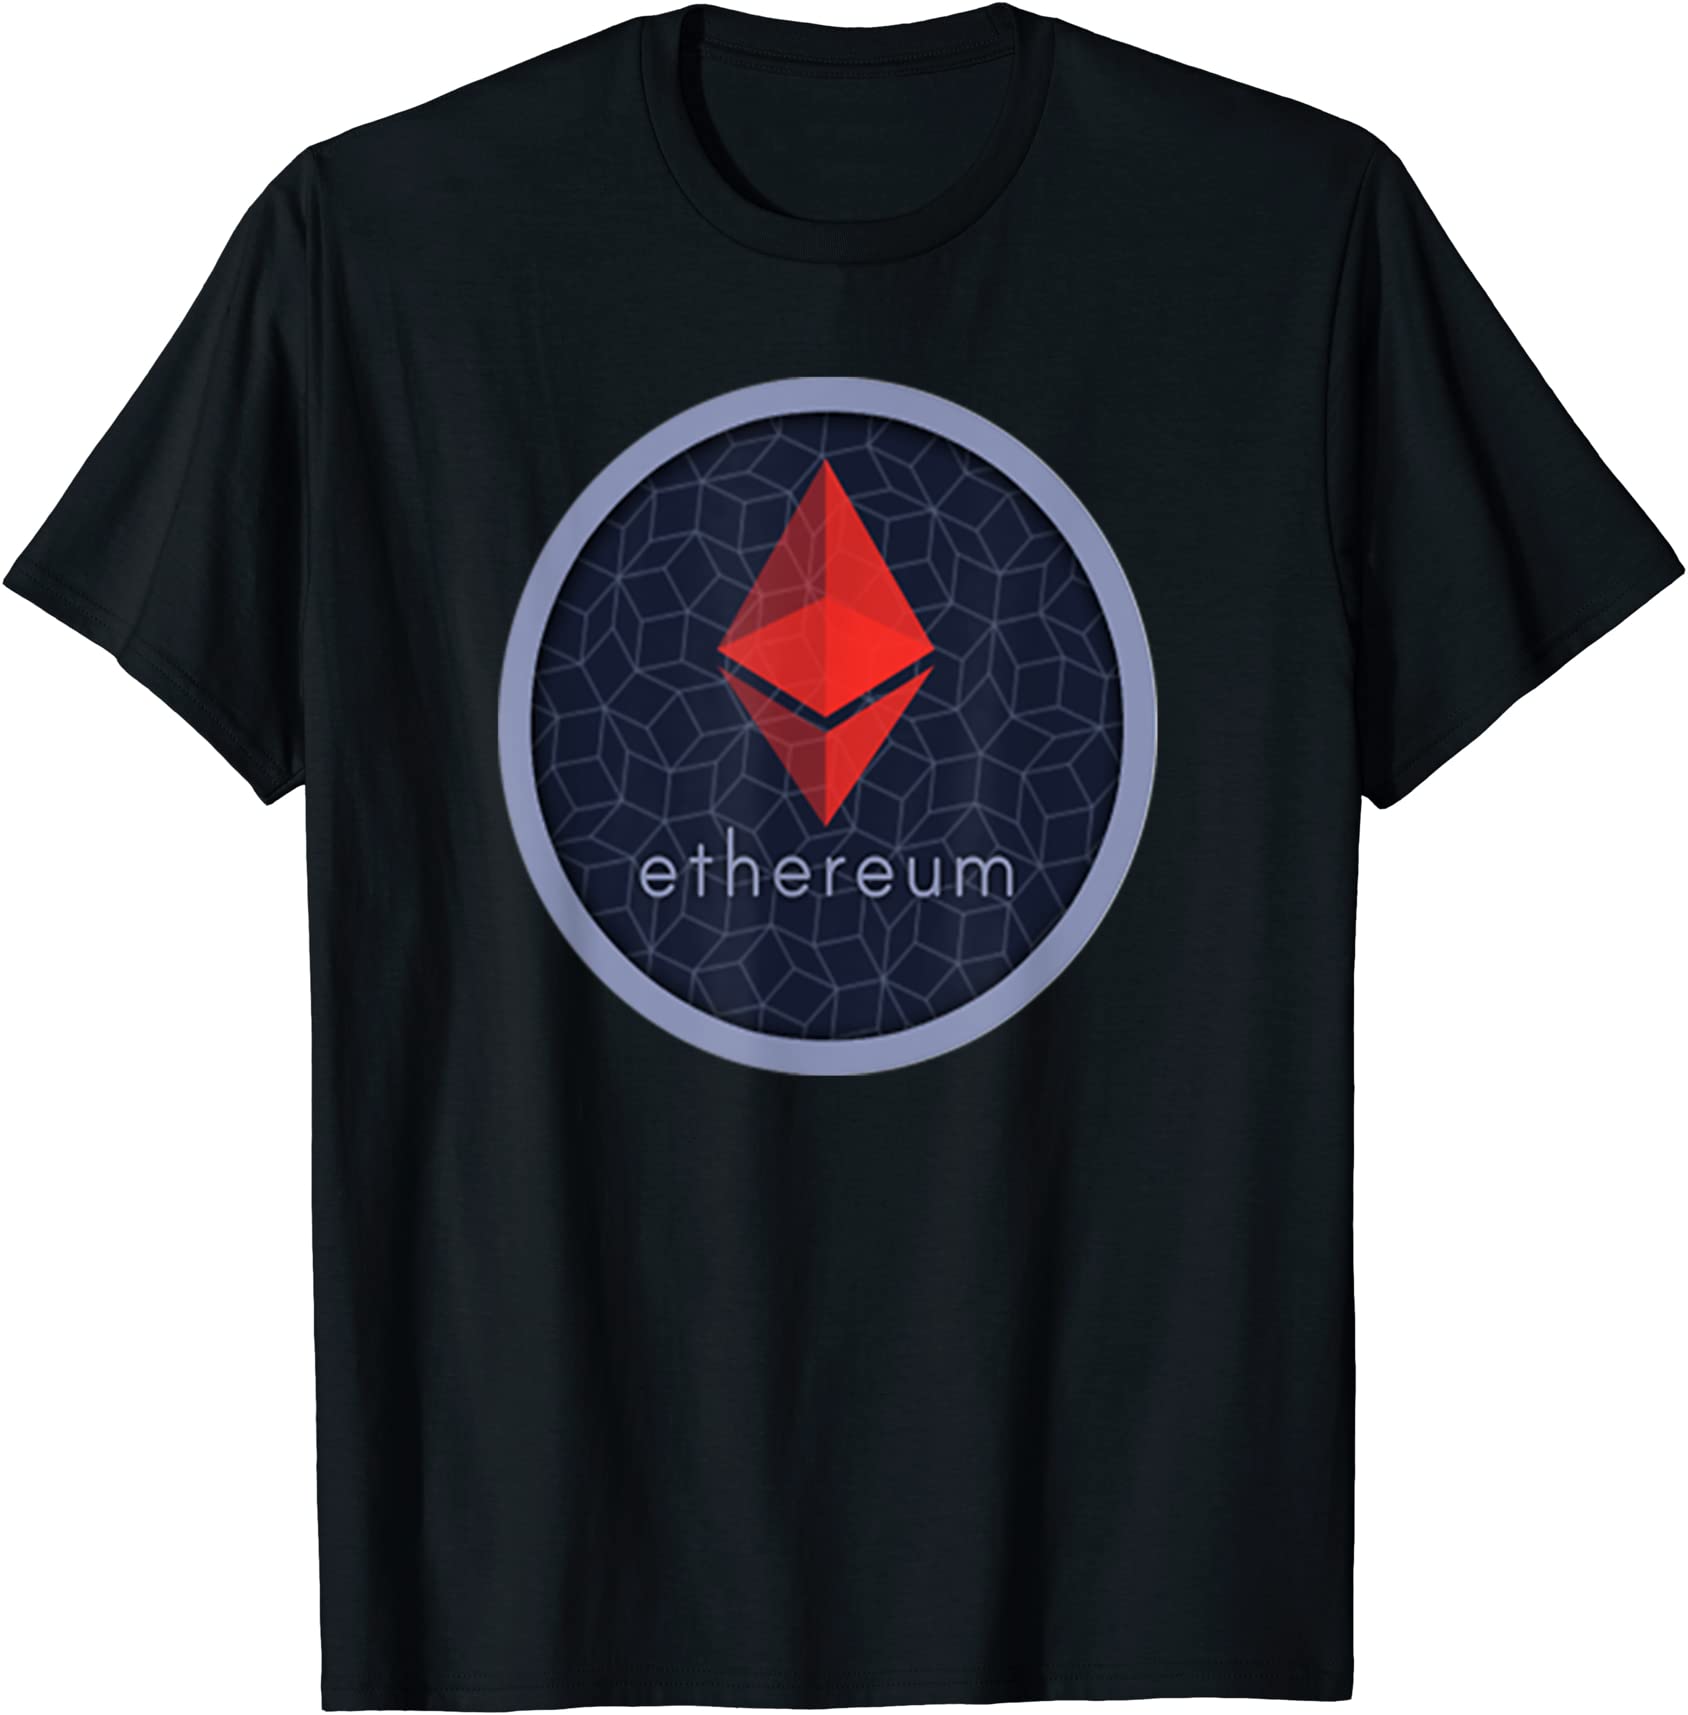 ethereum 2017 original logo tshirt men - Buy t-shirt designs